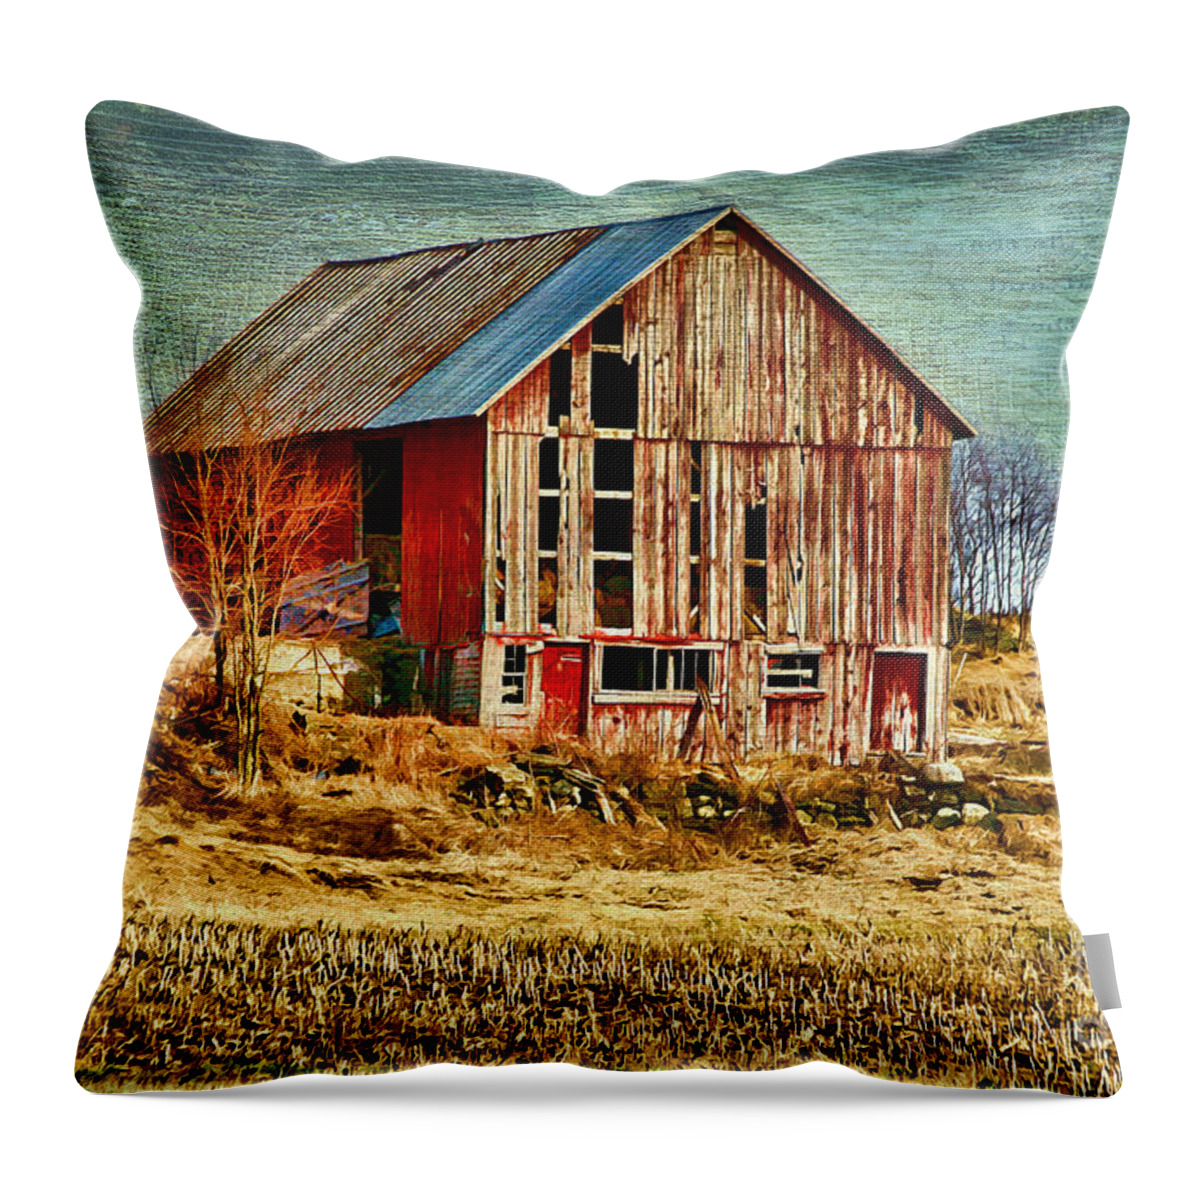 Rustic Throw Pillow featuring the photograph Rural Rustic Vermont Scene by Deborah Benoit